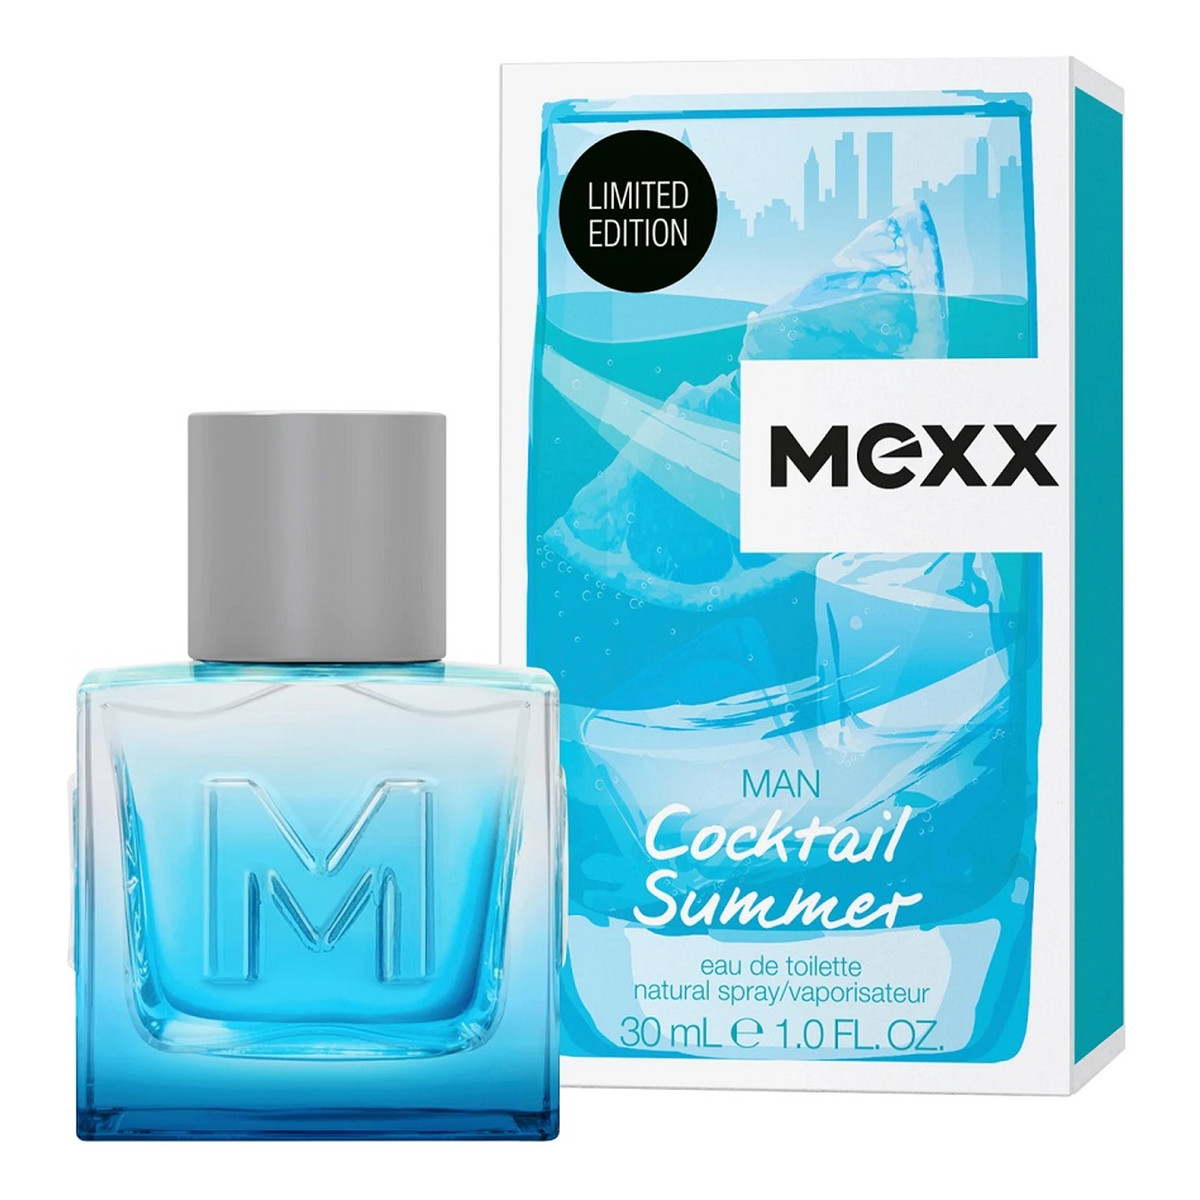 Mexx Cocktail Summer Man Woda toaletowa spray 30ml